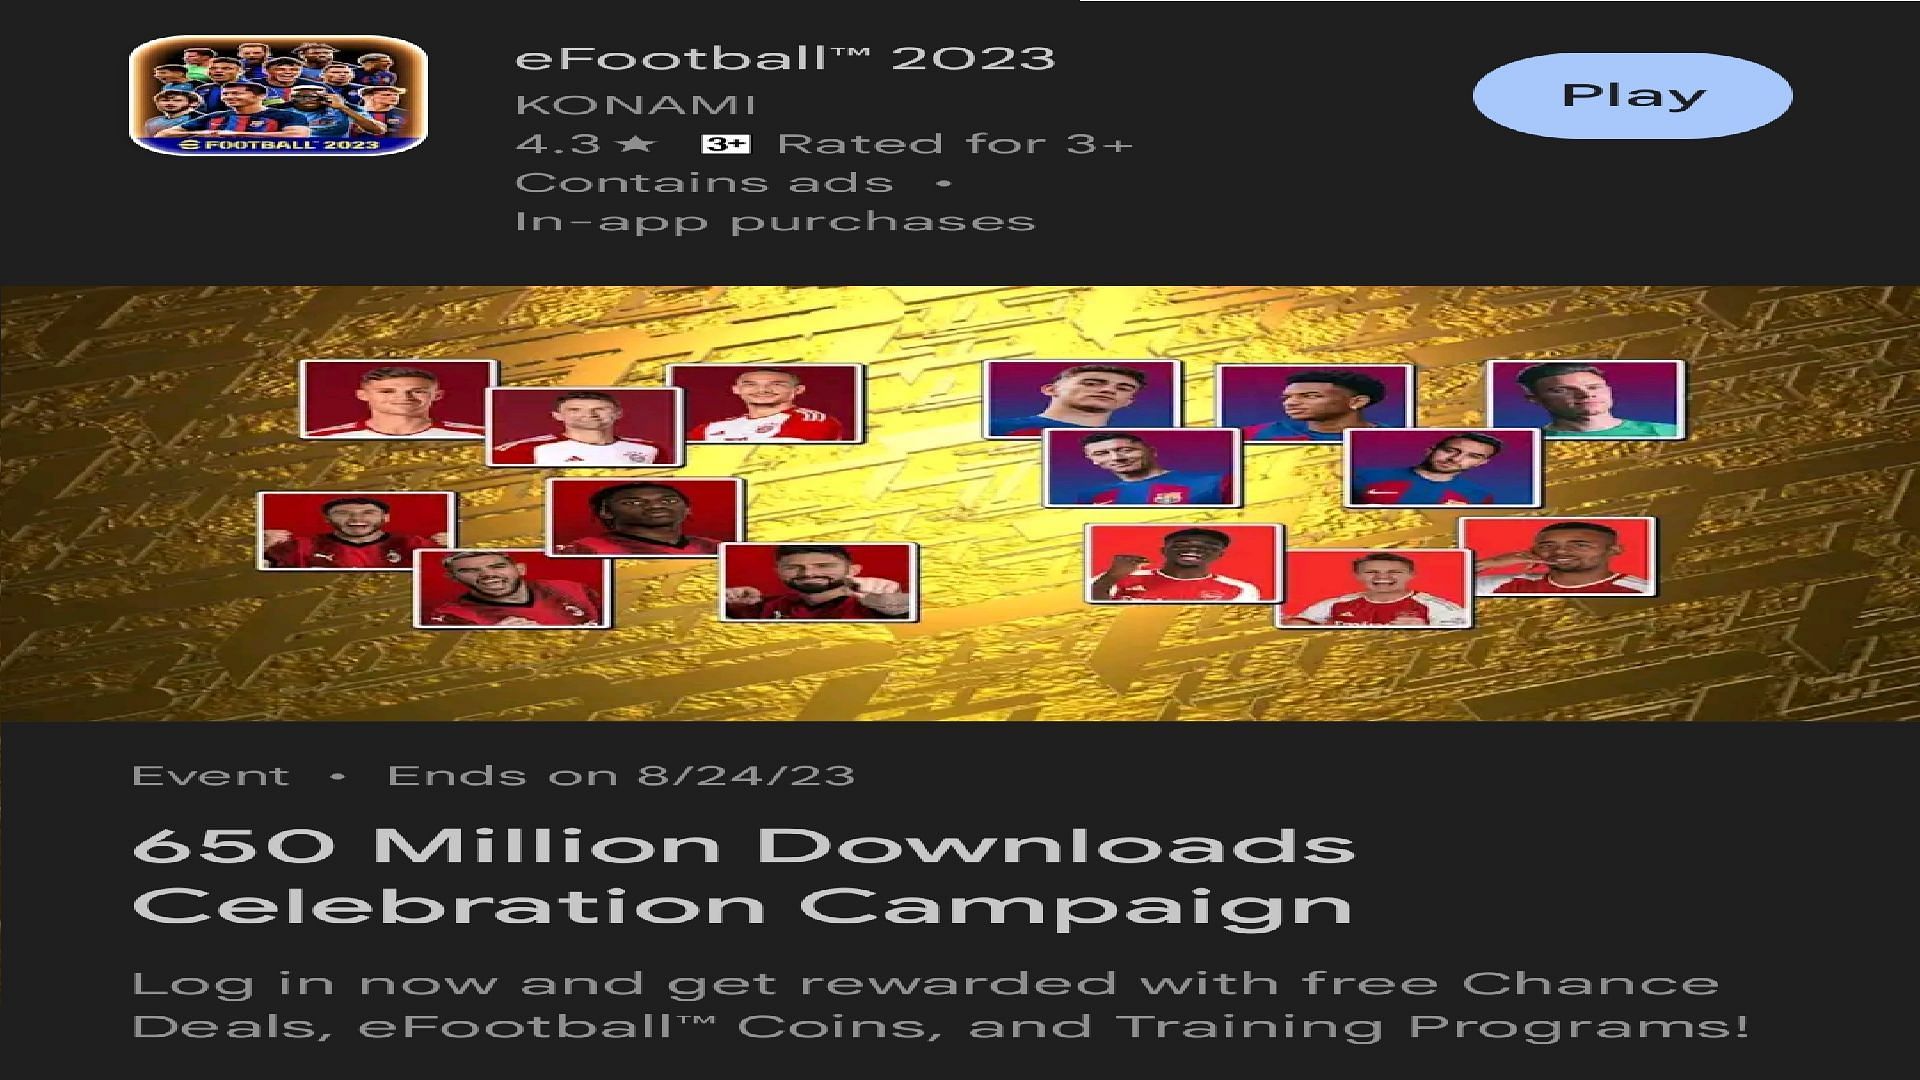 eFootball 2023 celebrates 600 million downloads